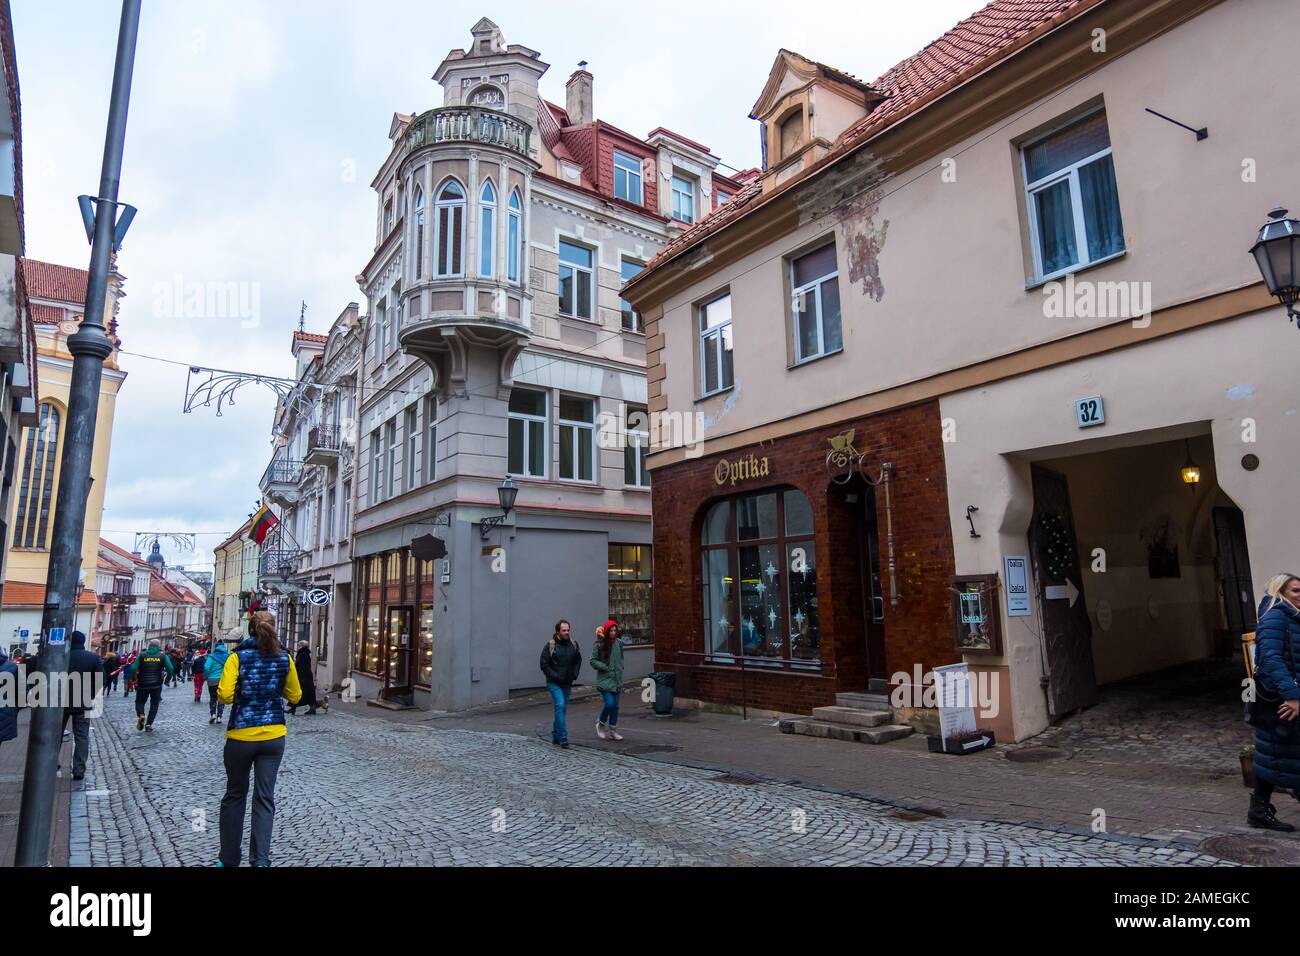 Vilnius, Lithuania - December 15, 2019: Street view in Old Town of Vilnius Stock Photo